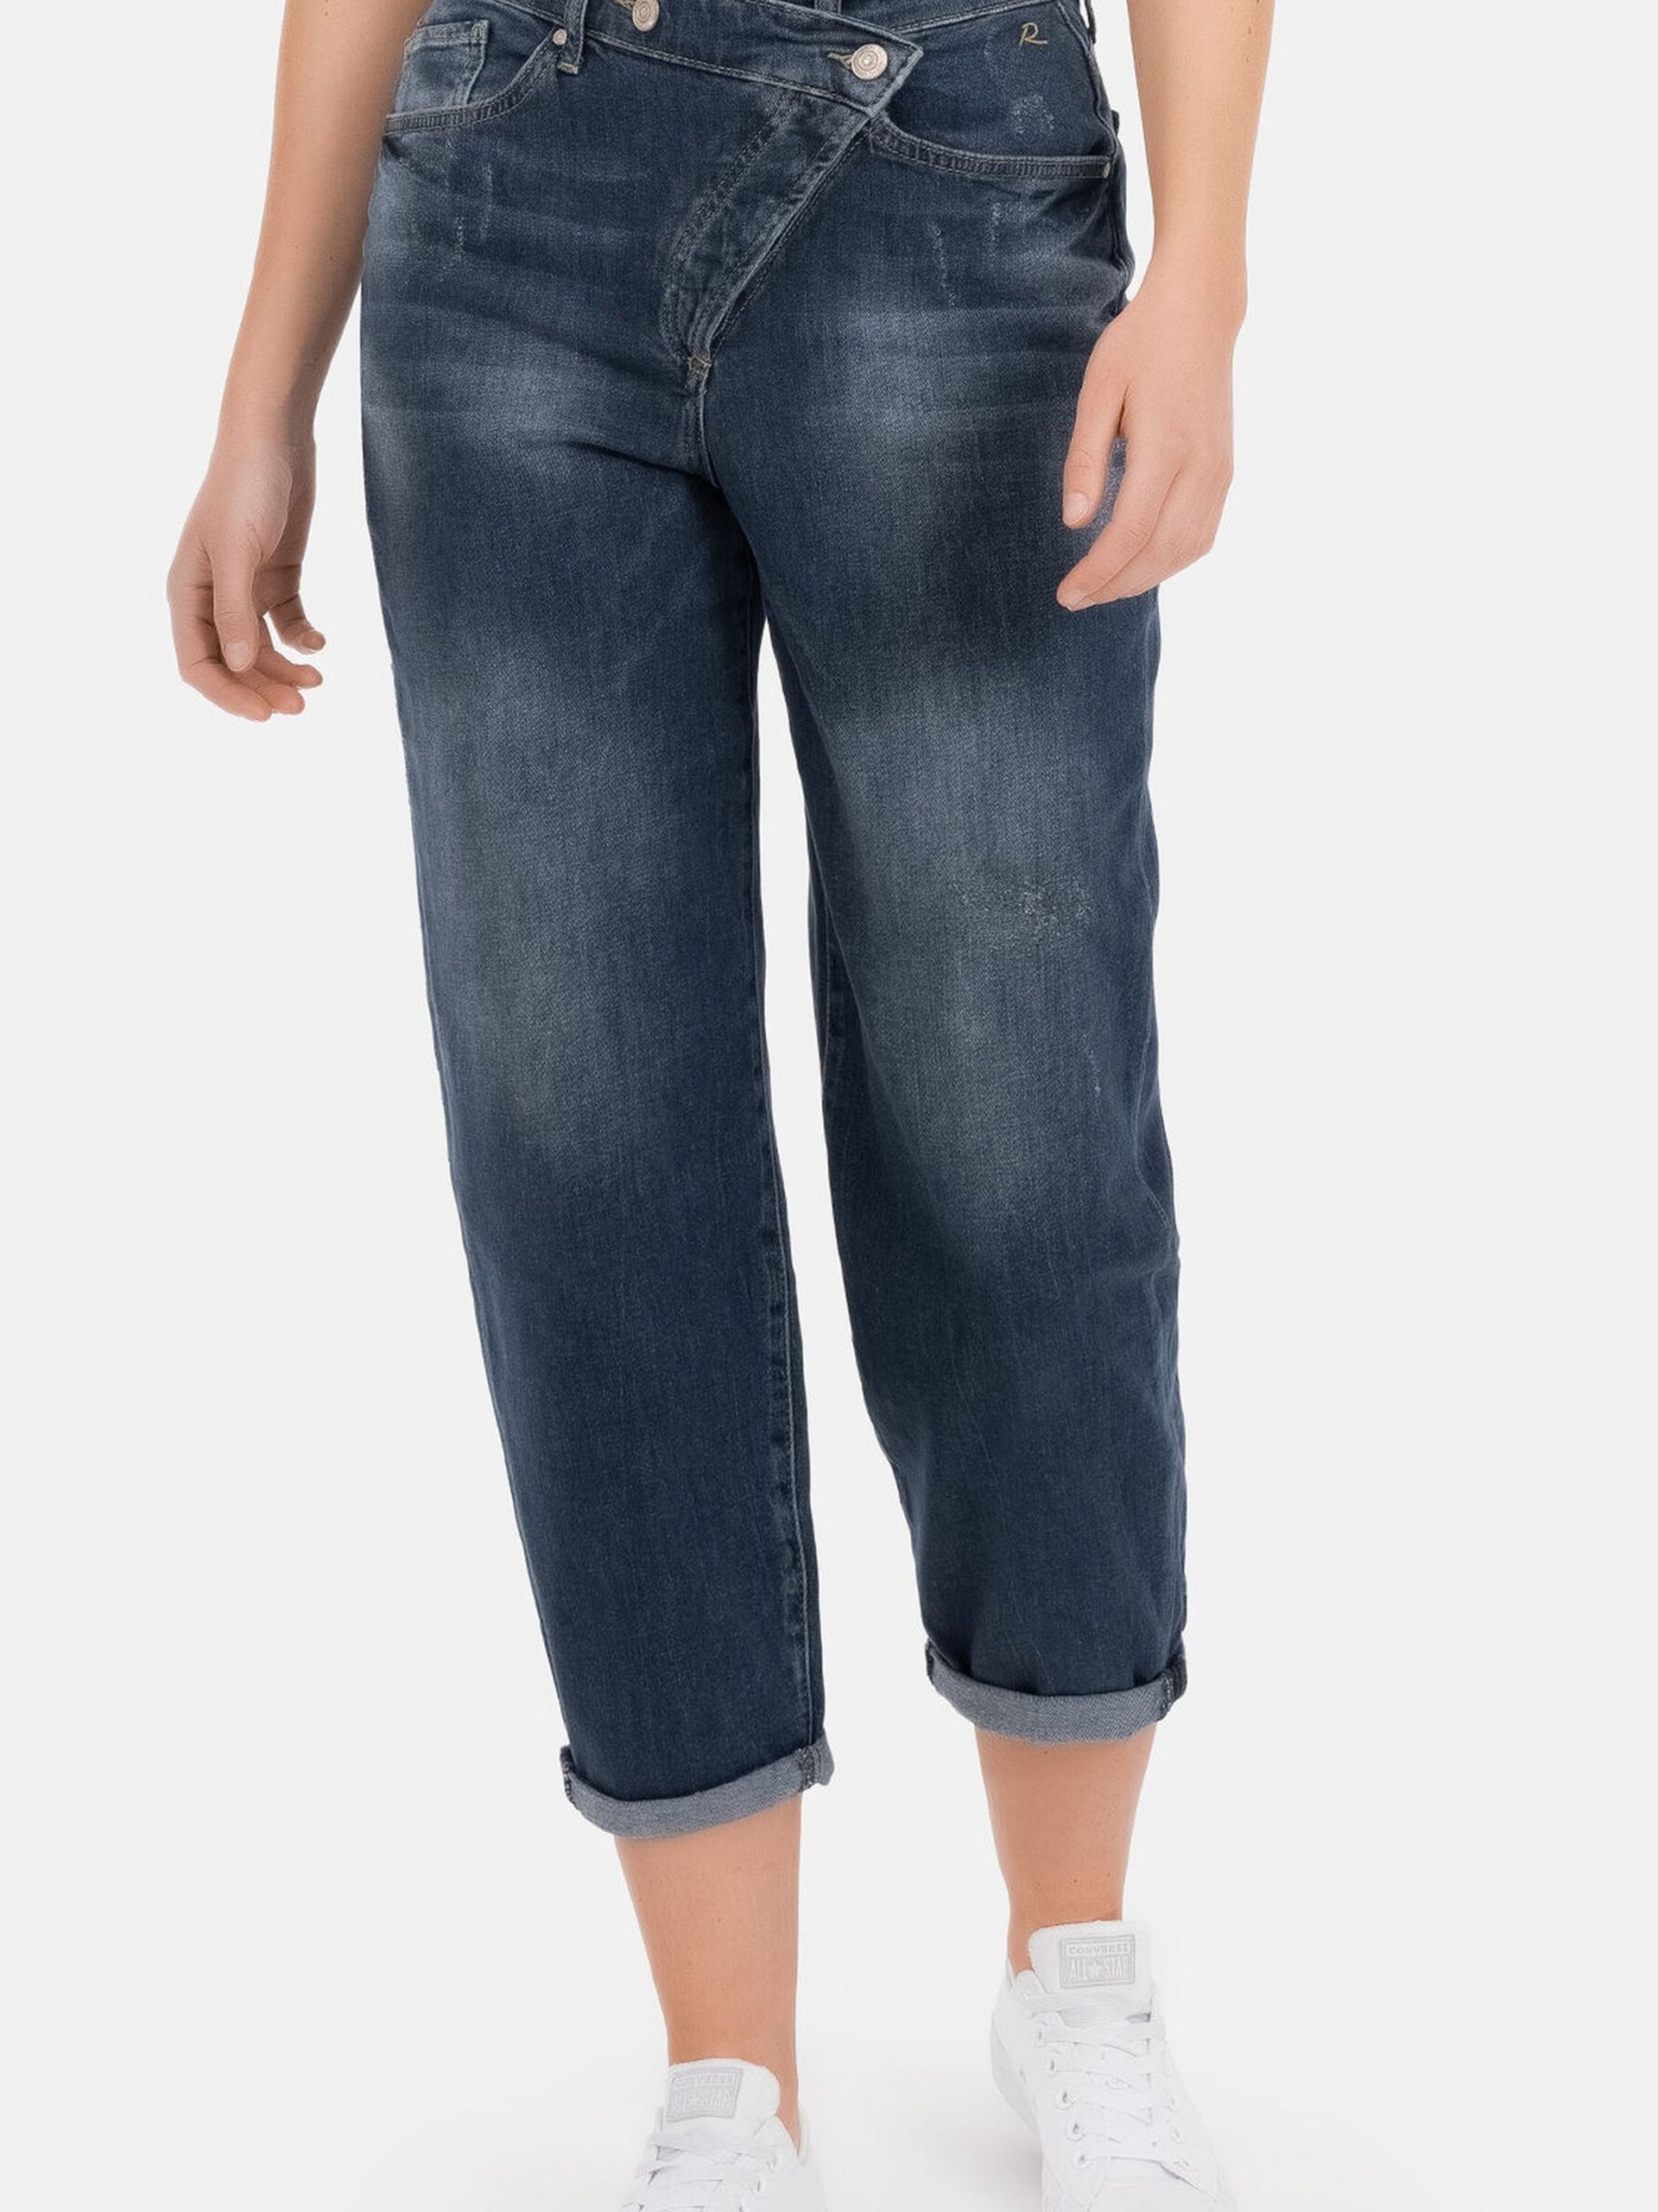 pants 7/8-Jeans RECOVER Gianna kaufen online - Damen